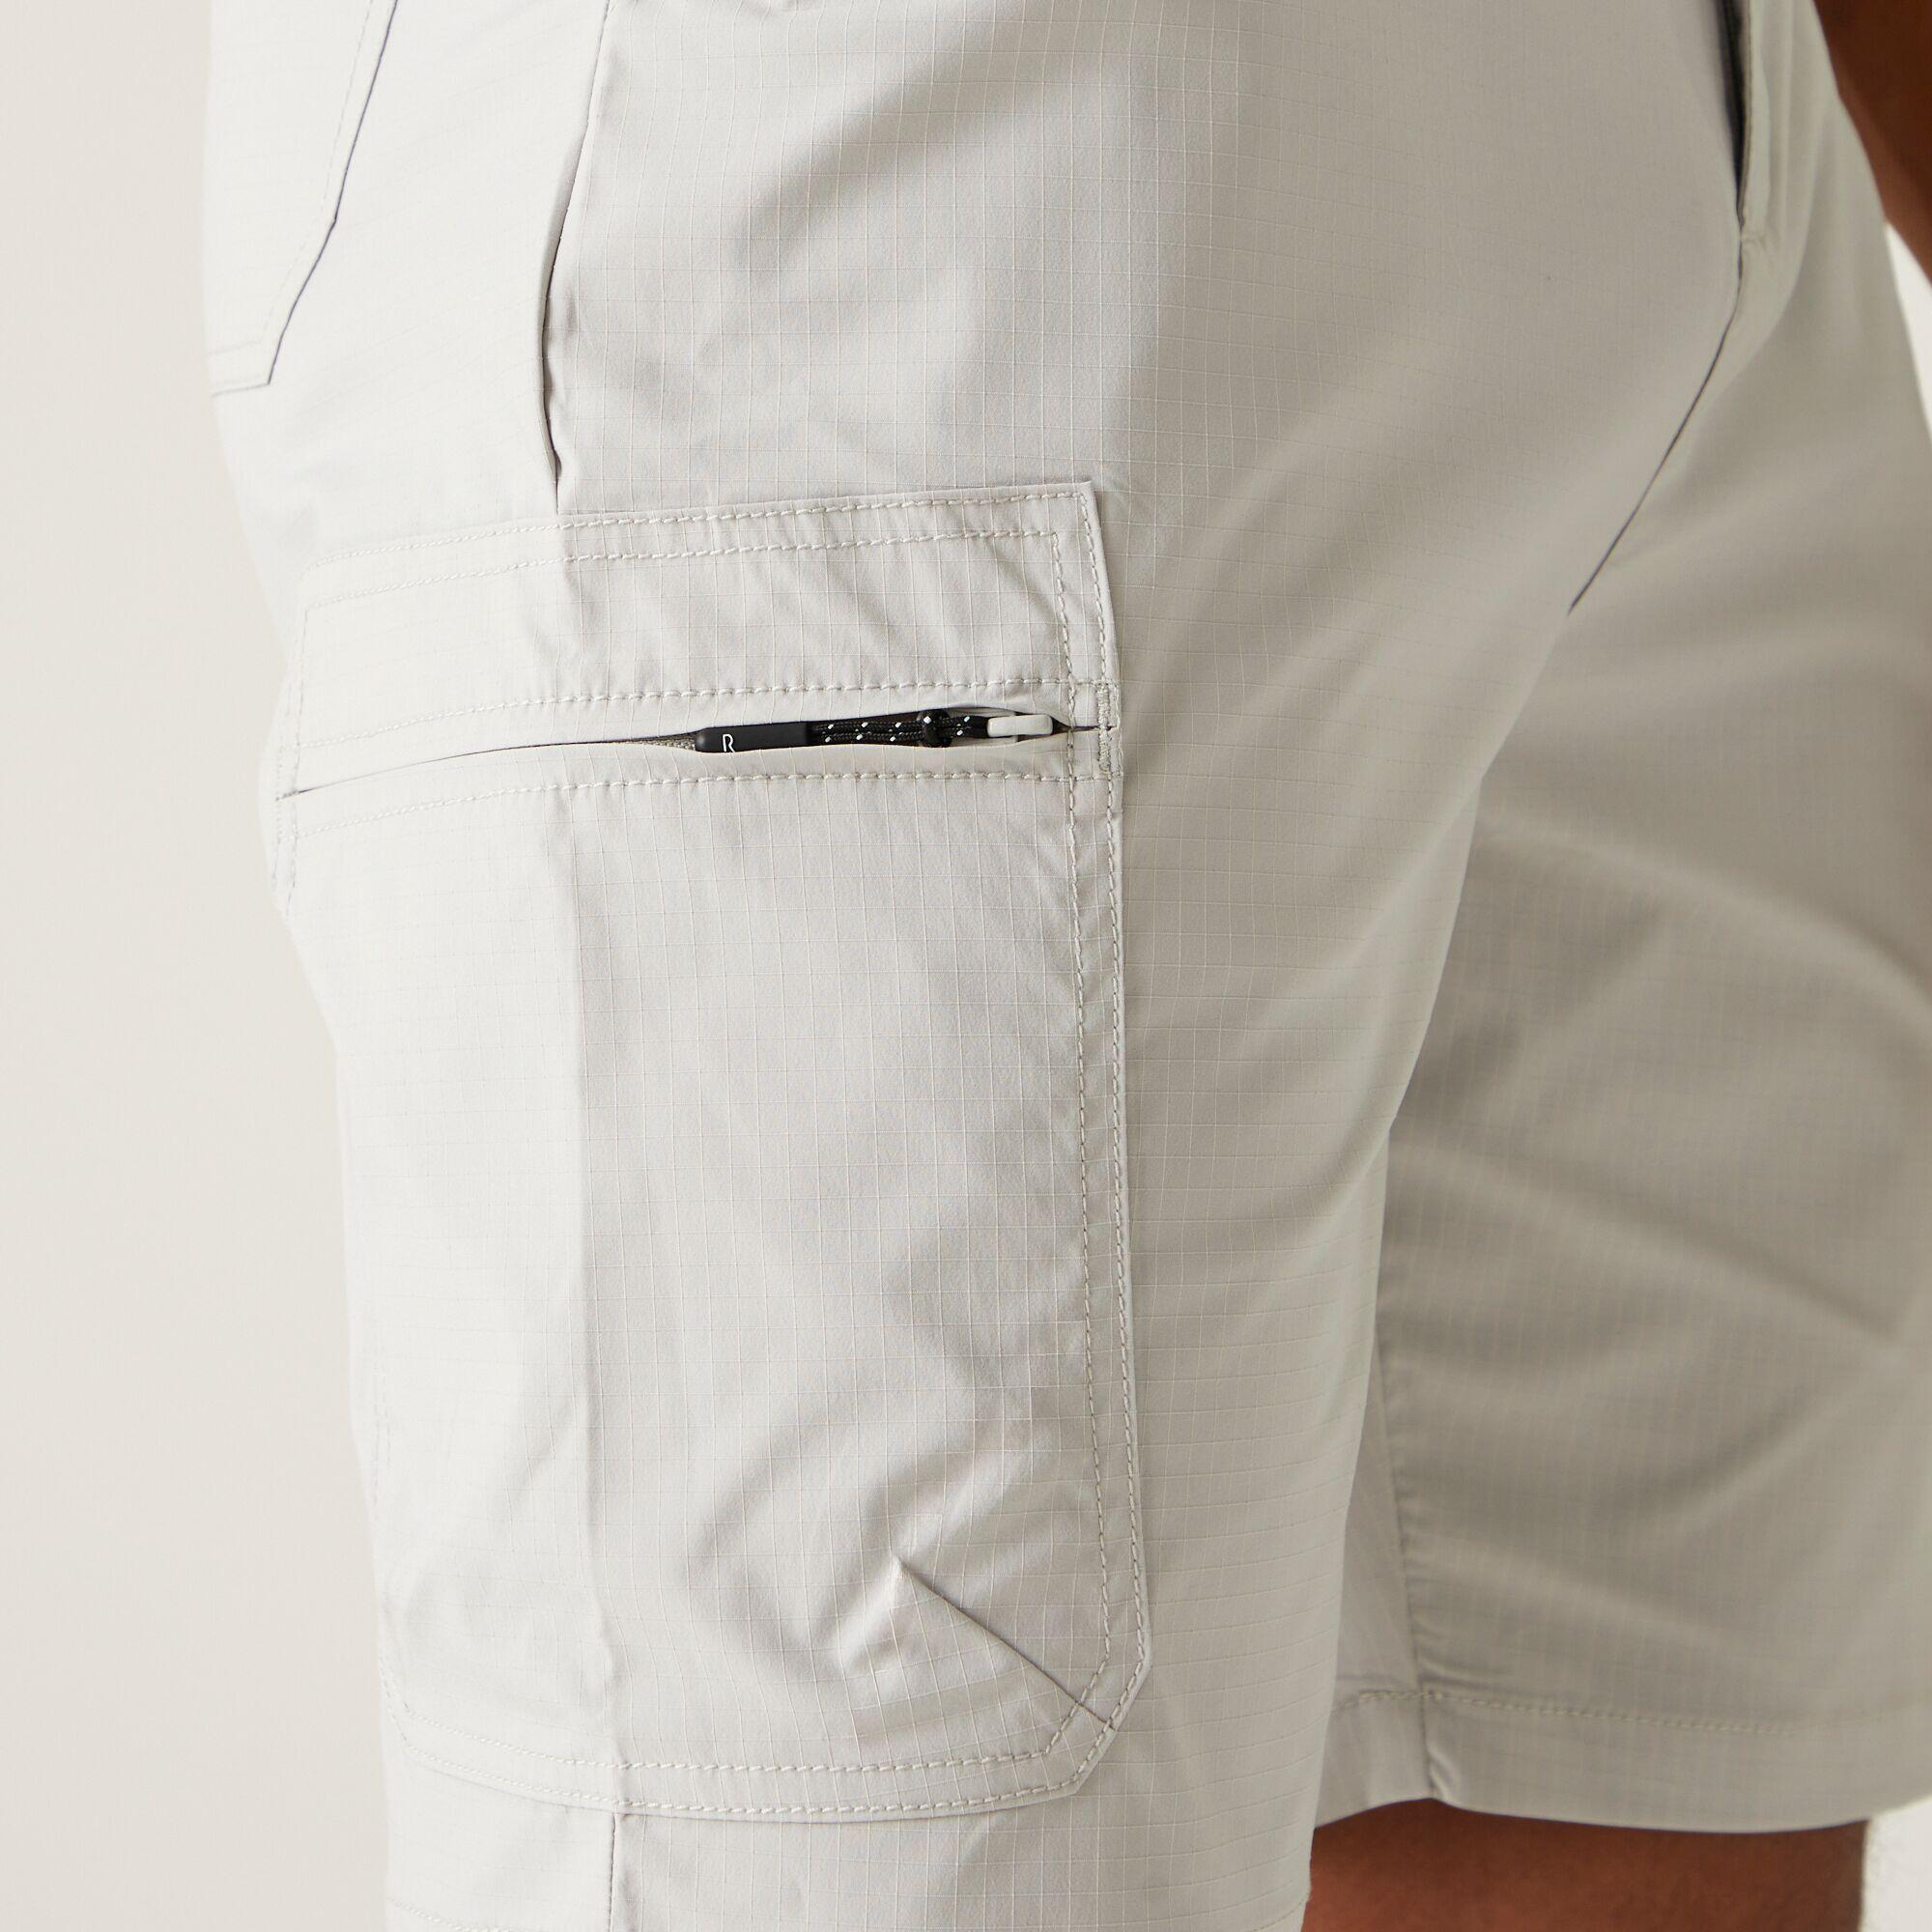 Men's Dalry Multi Pocket Shorts 4/5